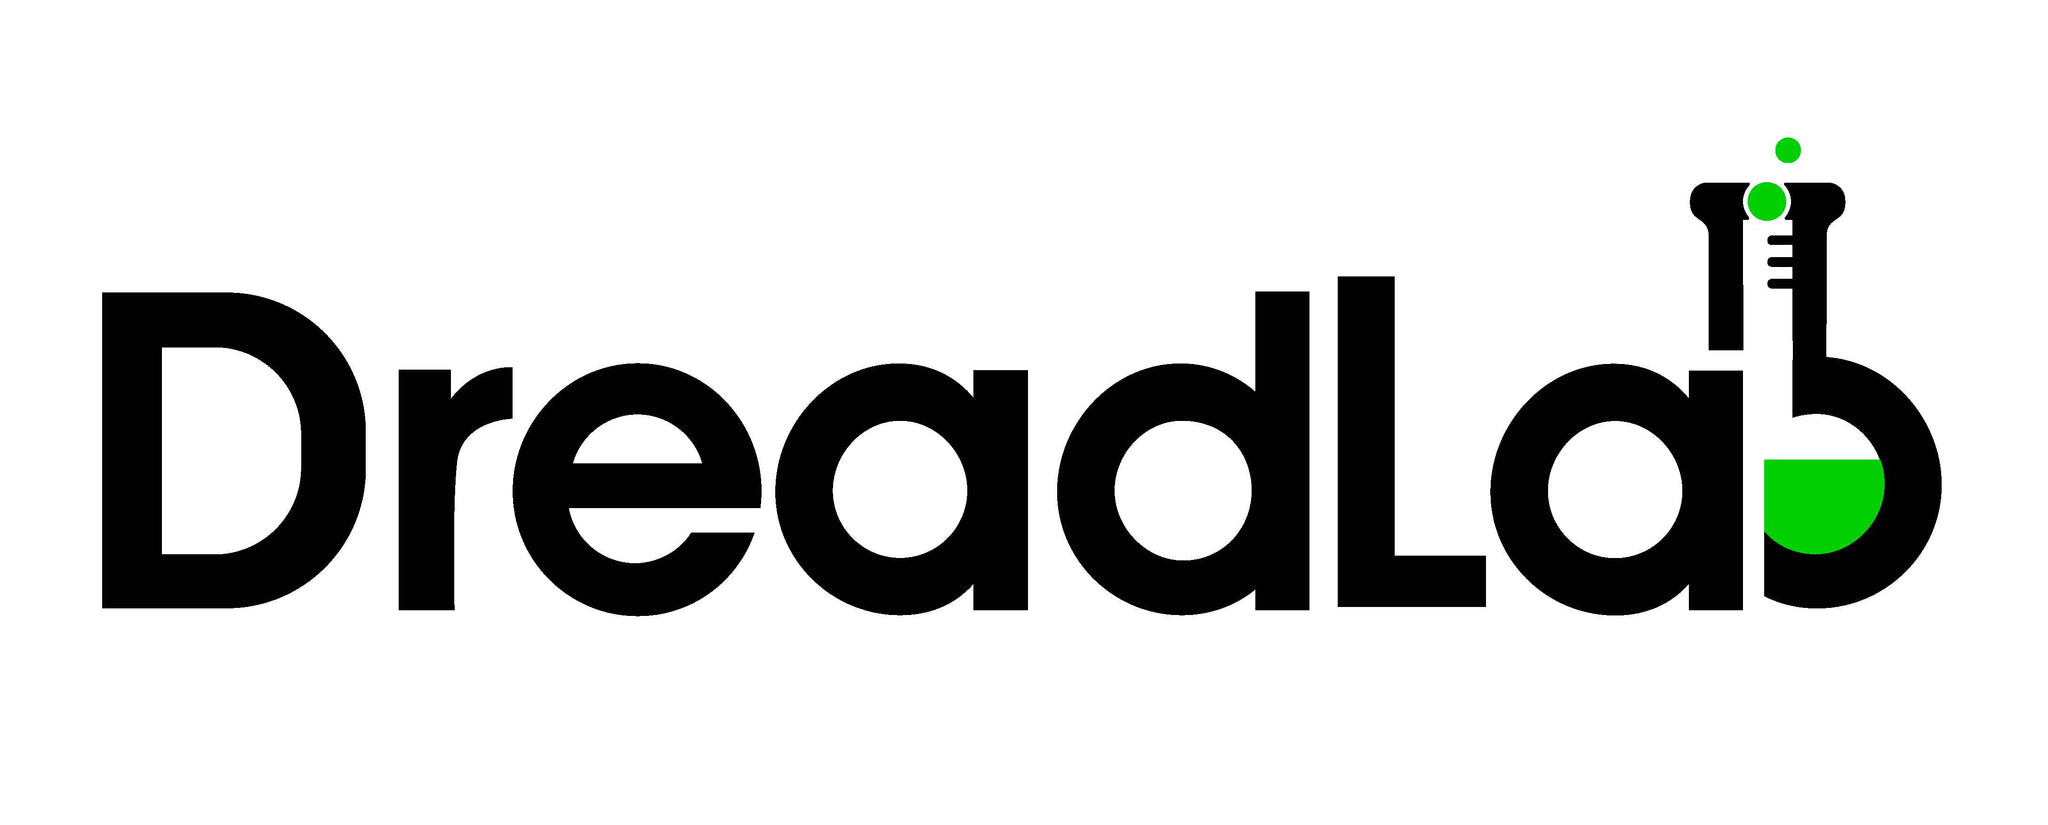 DreadLab - Logo T-Shirt Organic Certified